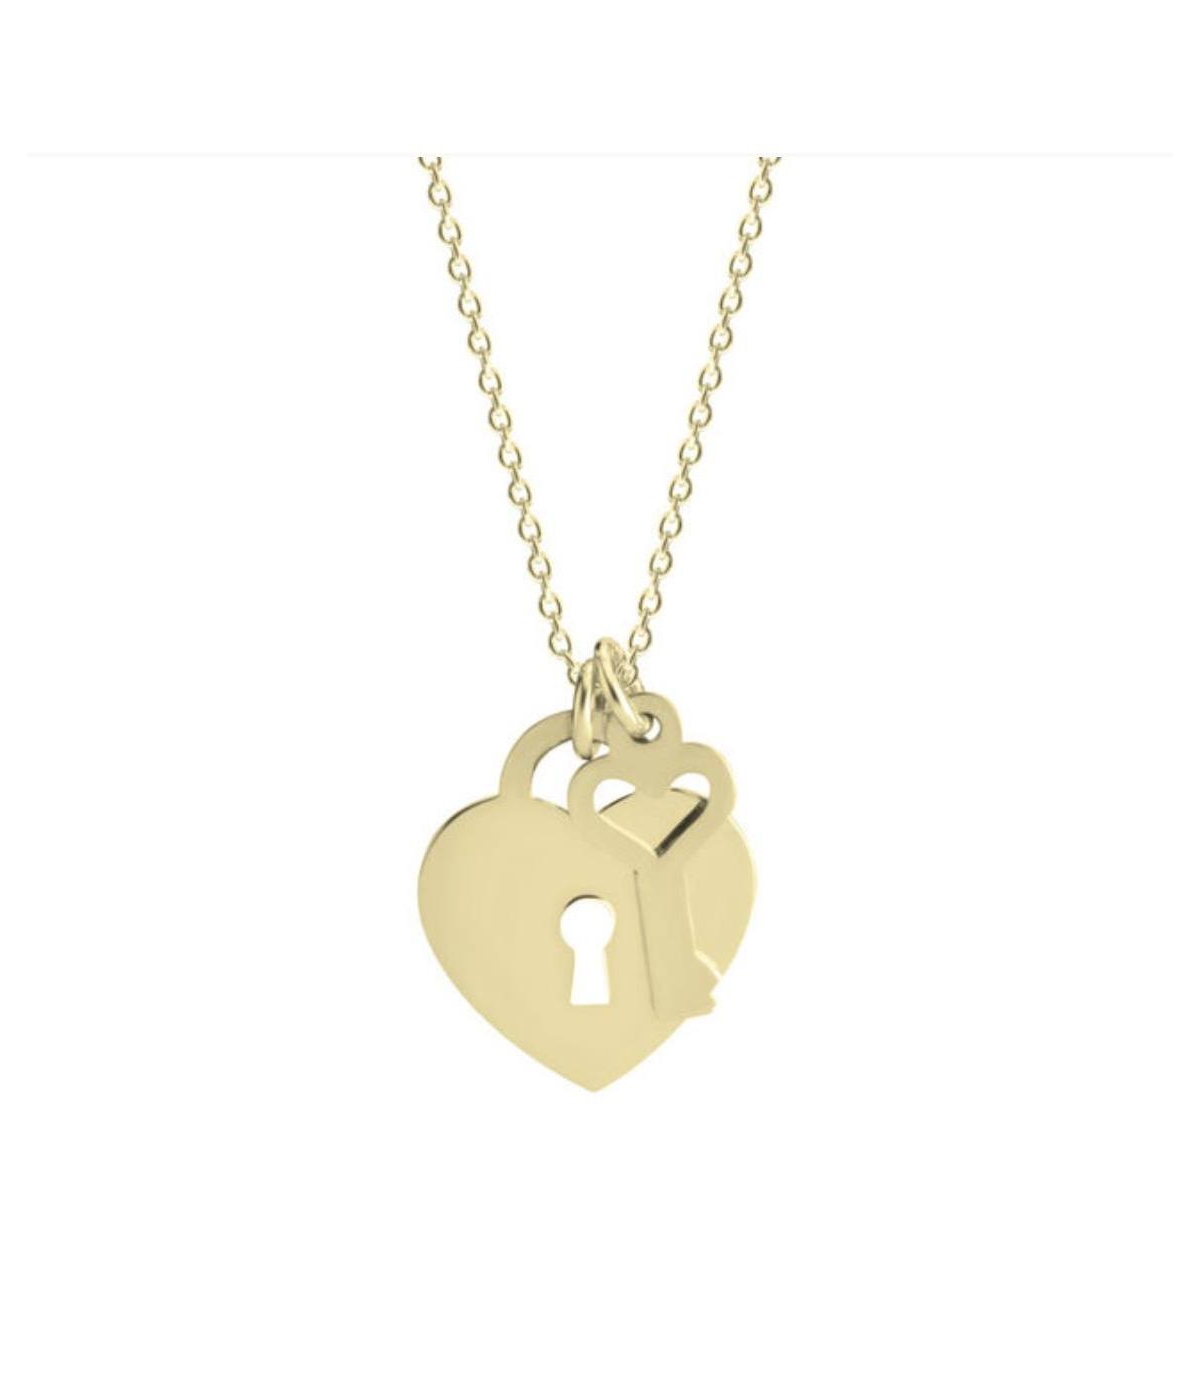 Heart Lock Necklace - Silver